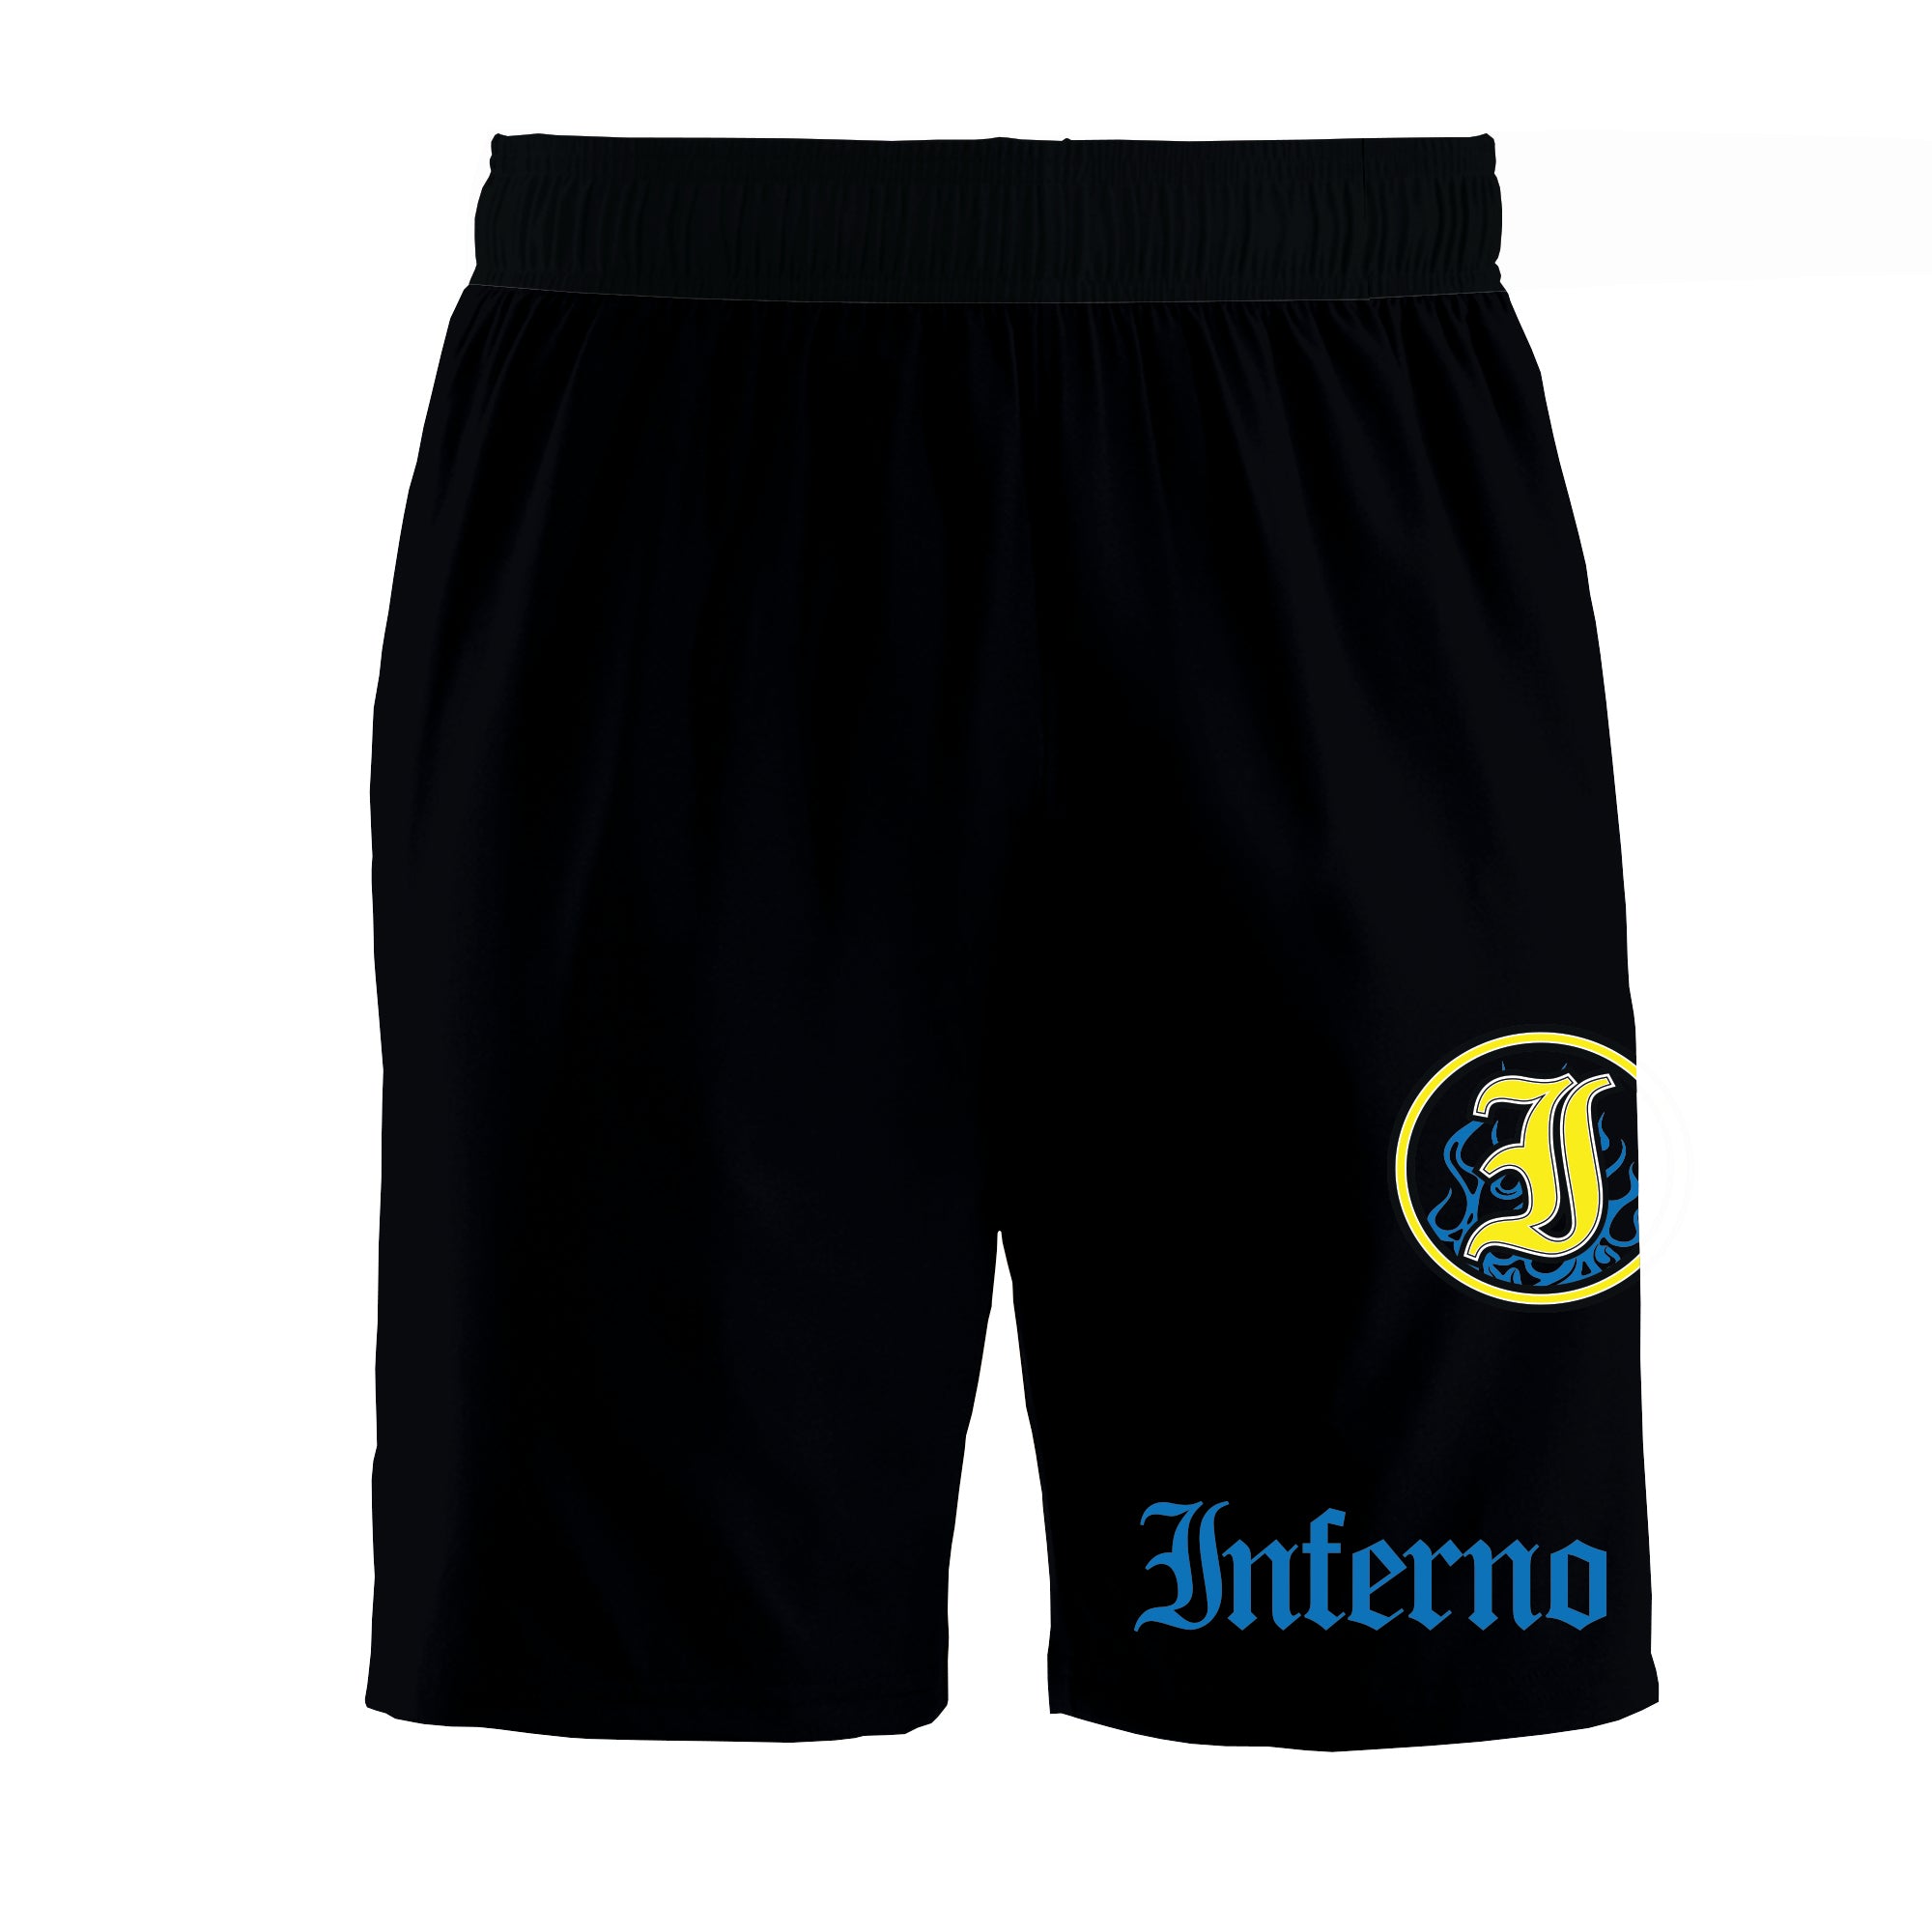 Inferno 4-Way Black Microfiber Shorts - Inferno Sports and Athletics